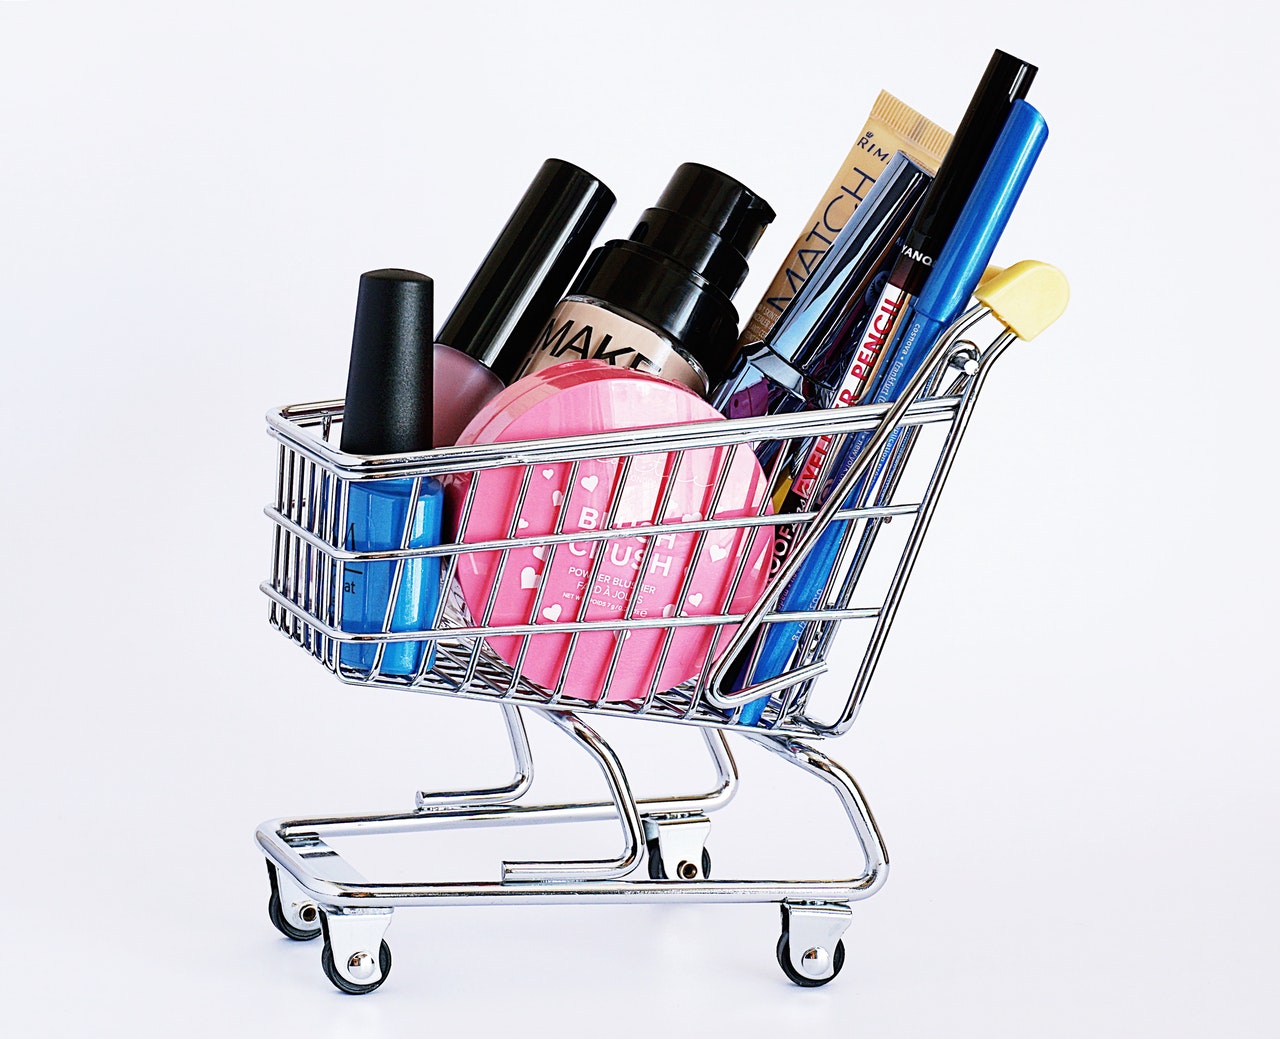 Embalagens para perfumaria e cosméticos: o impacto no mercado